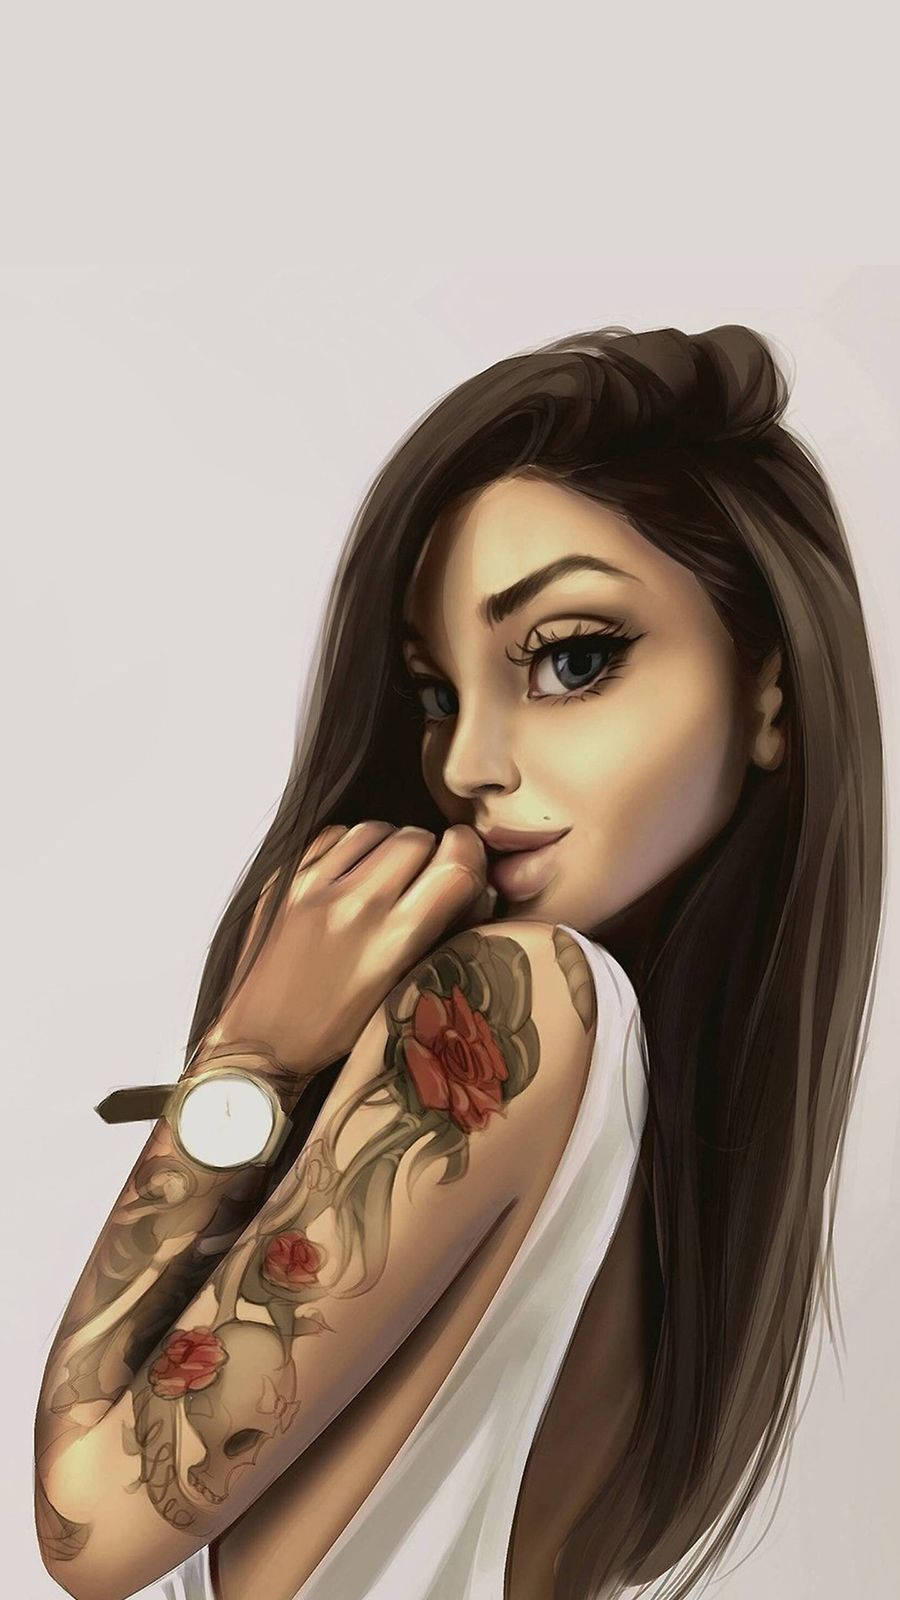 Cool Girl Cartoon With Tattoos Wallpaper